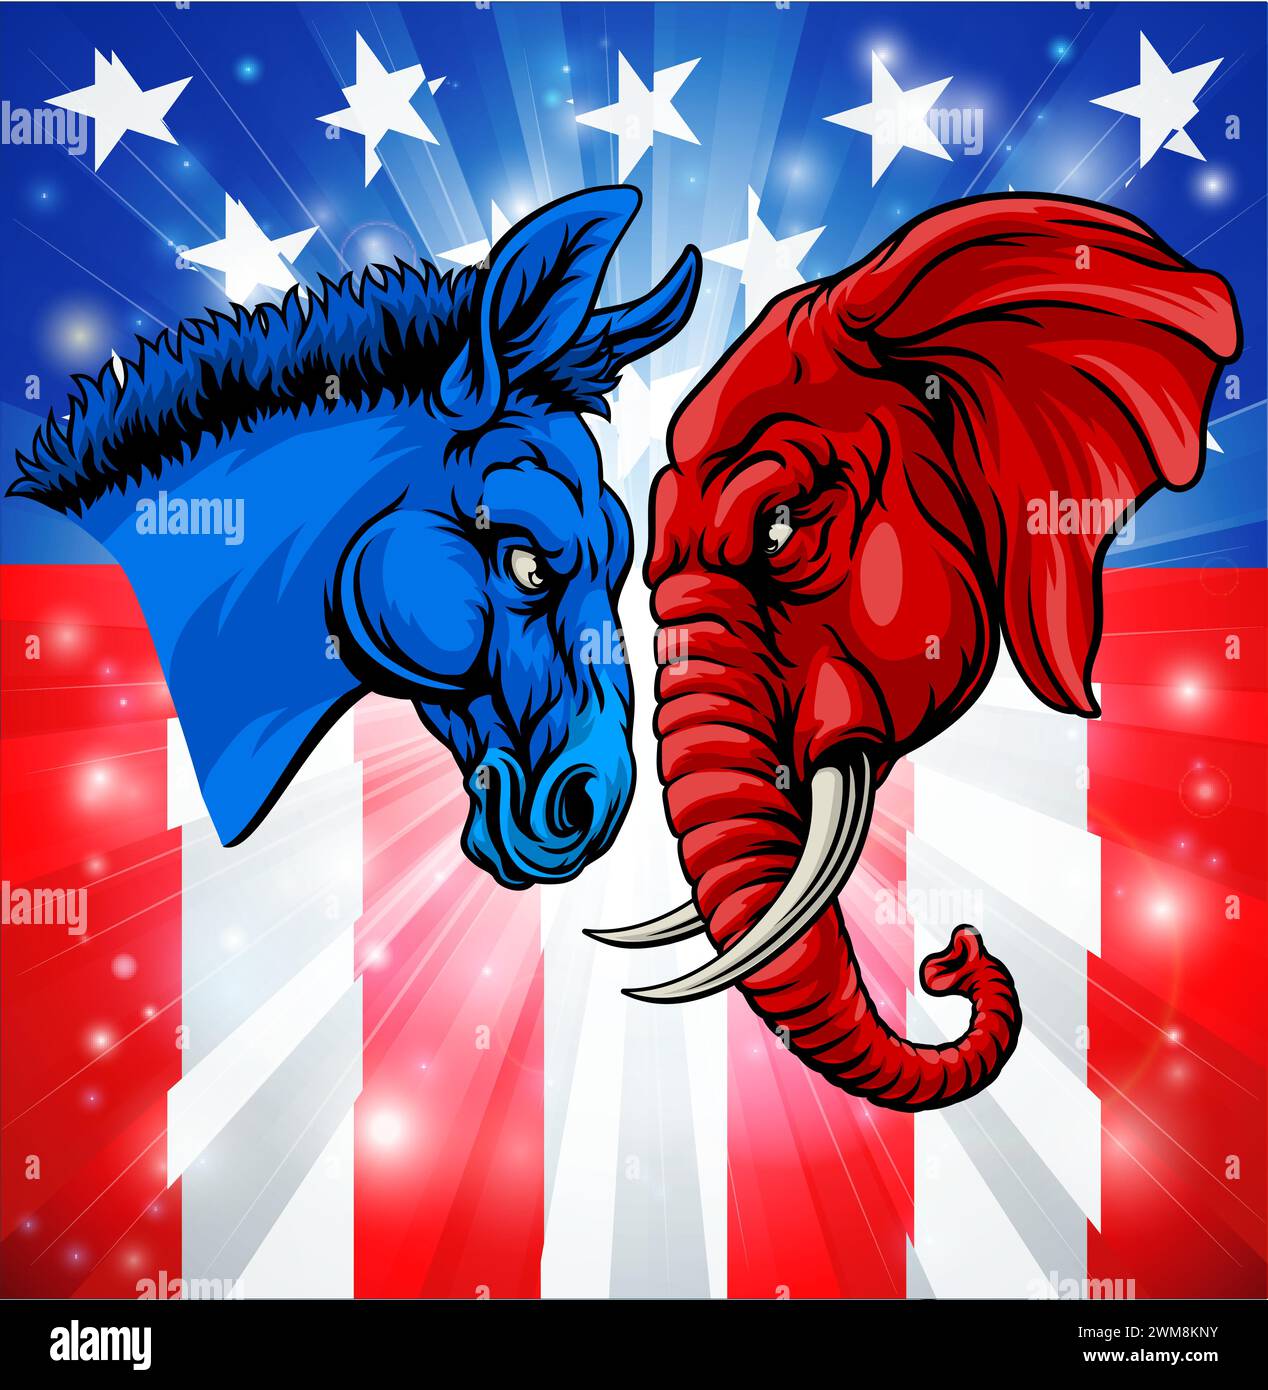 Republican Democrat Election Party Politics Stock Vector